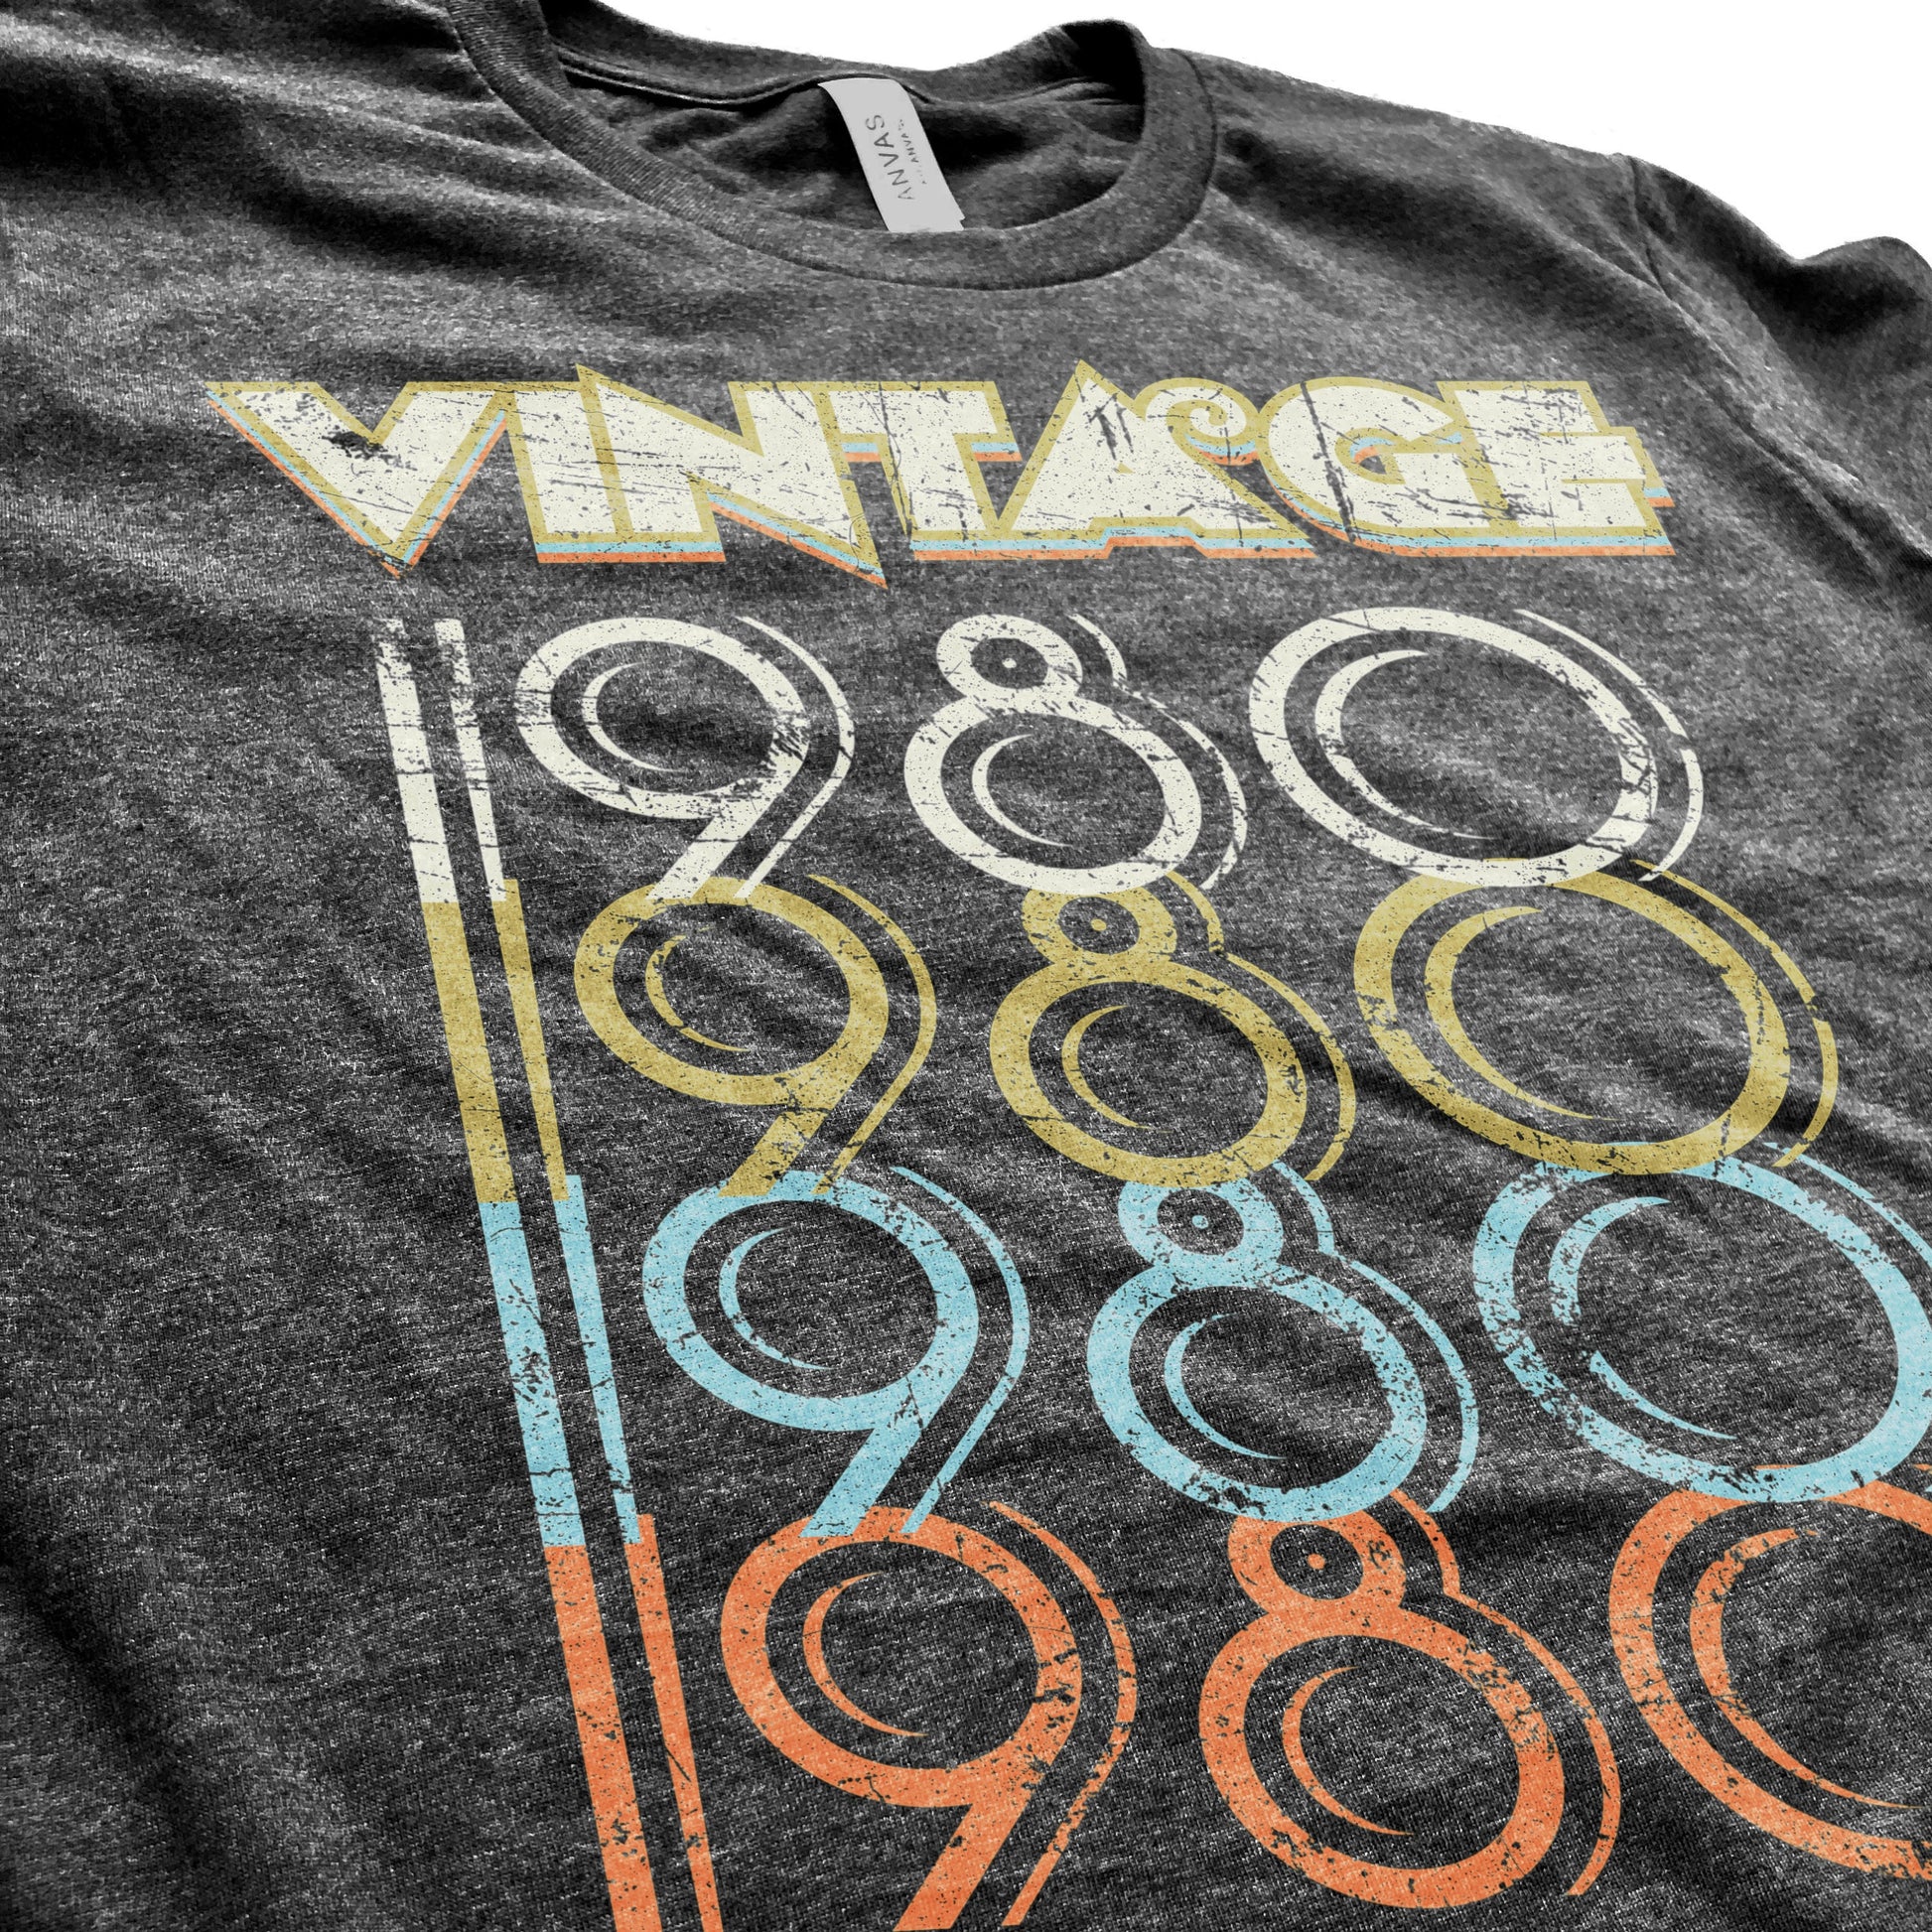 42nd Birthday Gift Vintage 1980 Tee Shirt for Men or Women Unisex Jersey Short Sleeve T-shirt